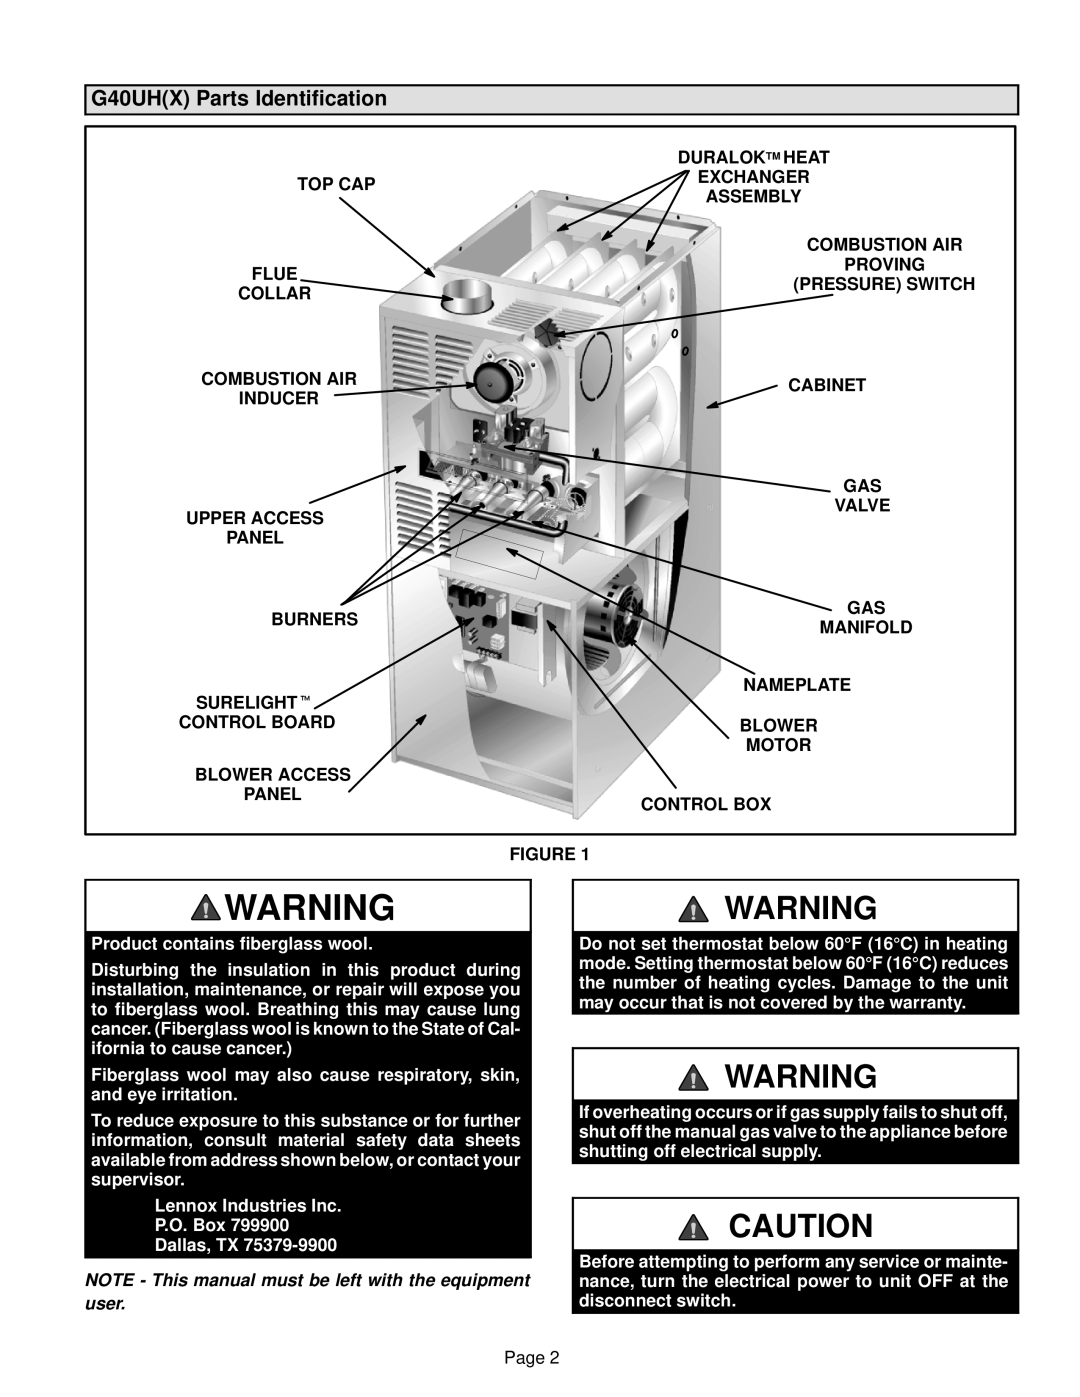 Lennox International Inc G40UH(X) manual G40UHX Parts Identification, Top Cap Flue Collar Combustion Air Inducer 